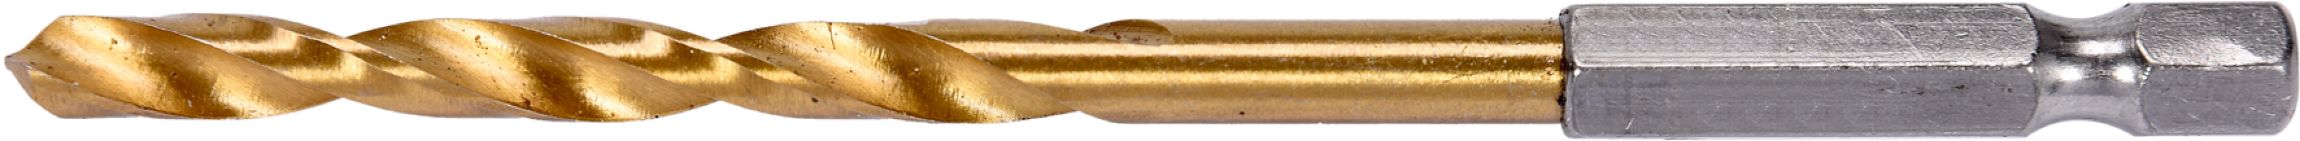 Vrtk do kovu HSS-titan 4,8mm se estihranou stopkou 1/4" Yato YT-44760